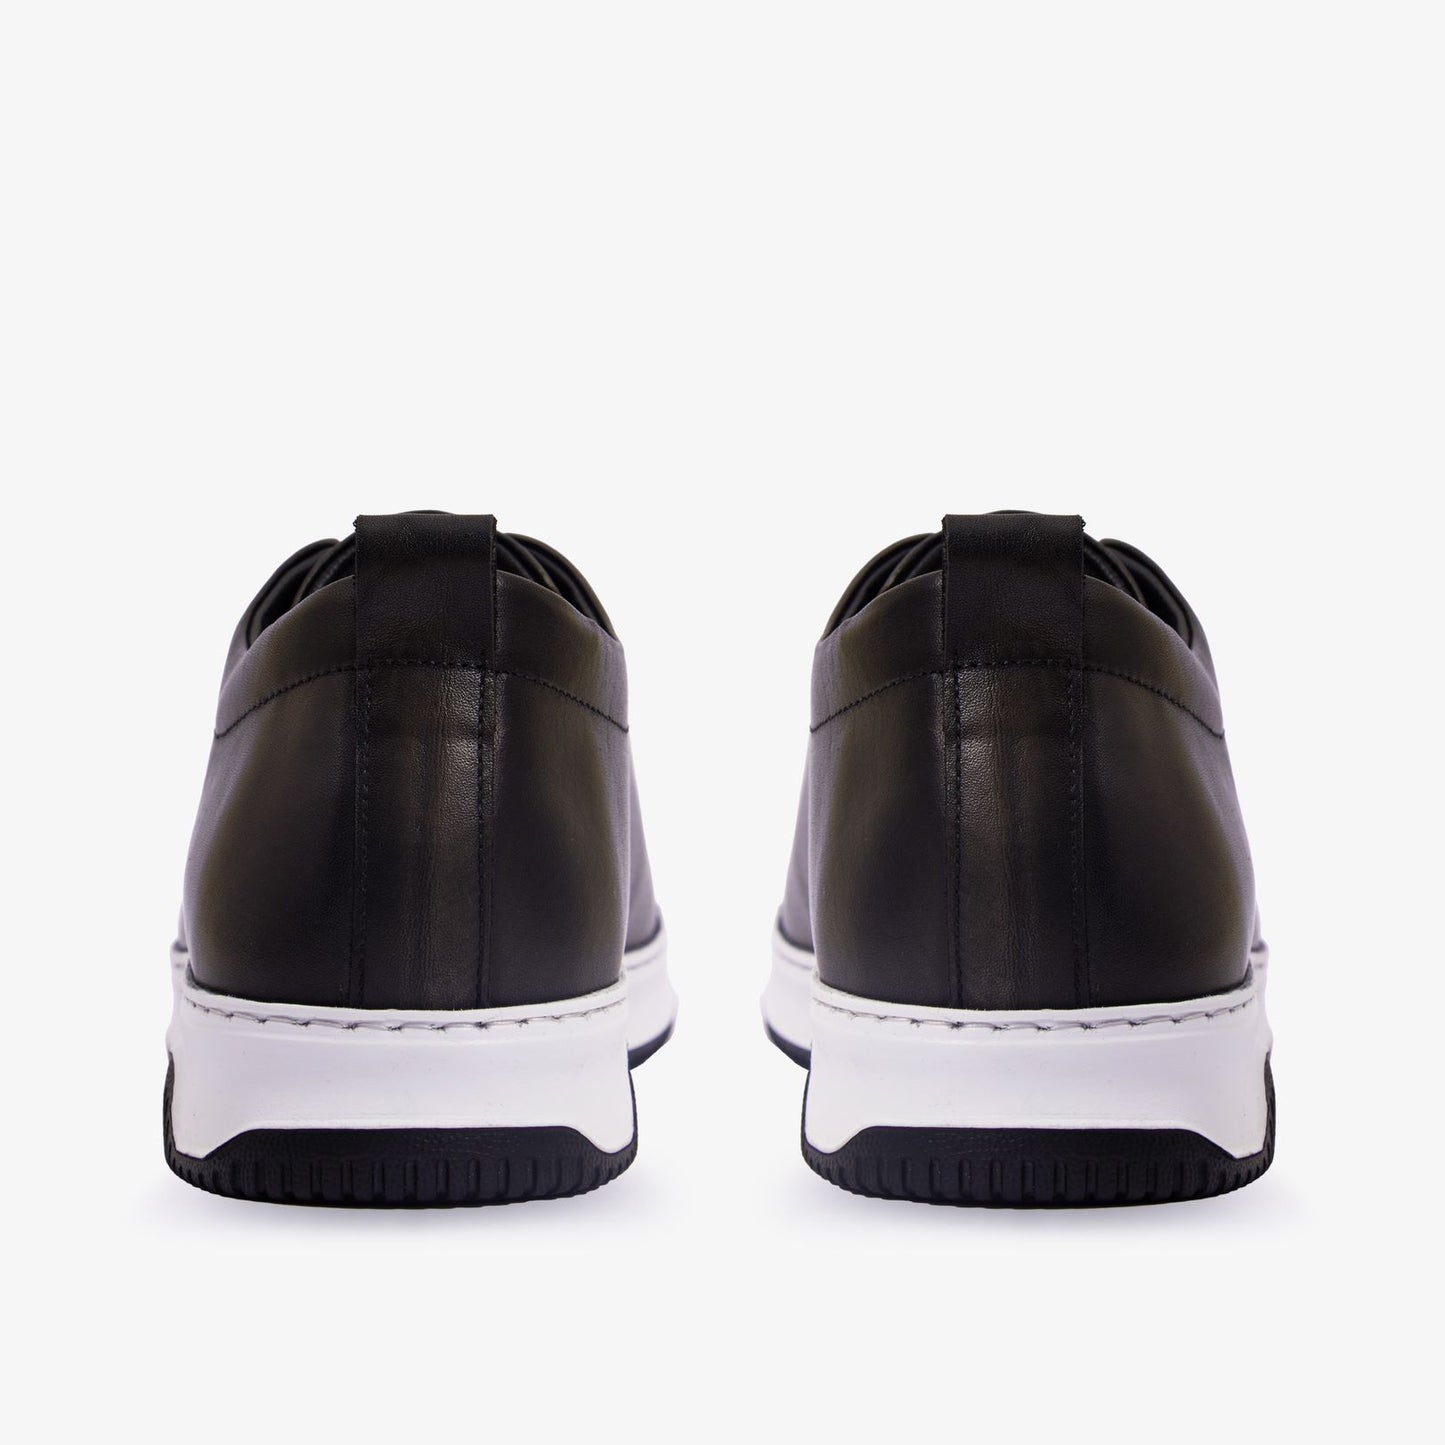 The Urgup Black Men Sneaker – Vinci Leather Shoes